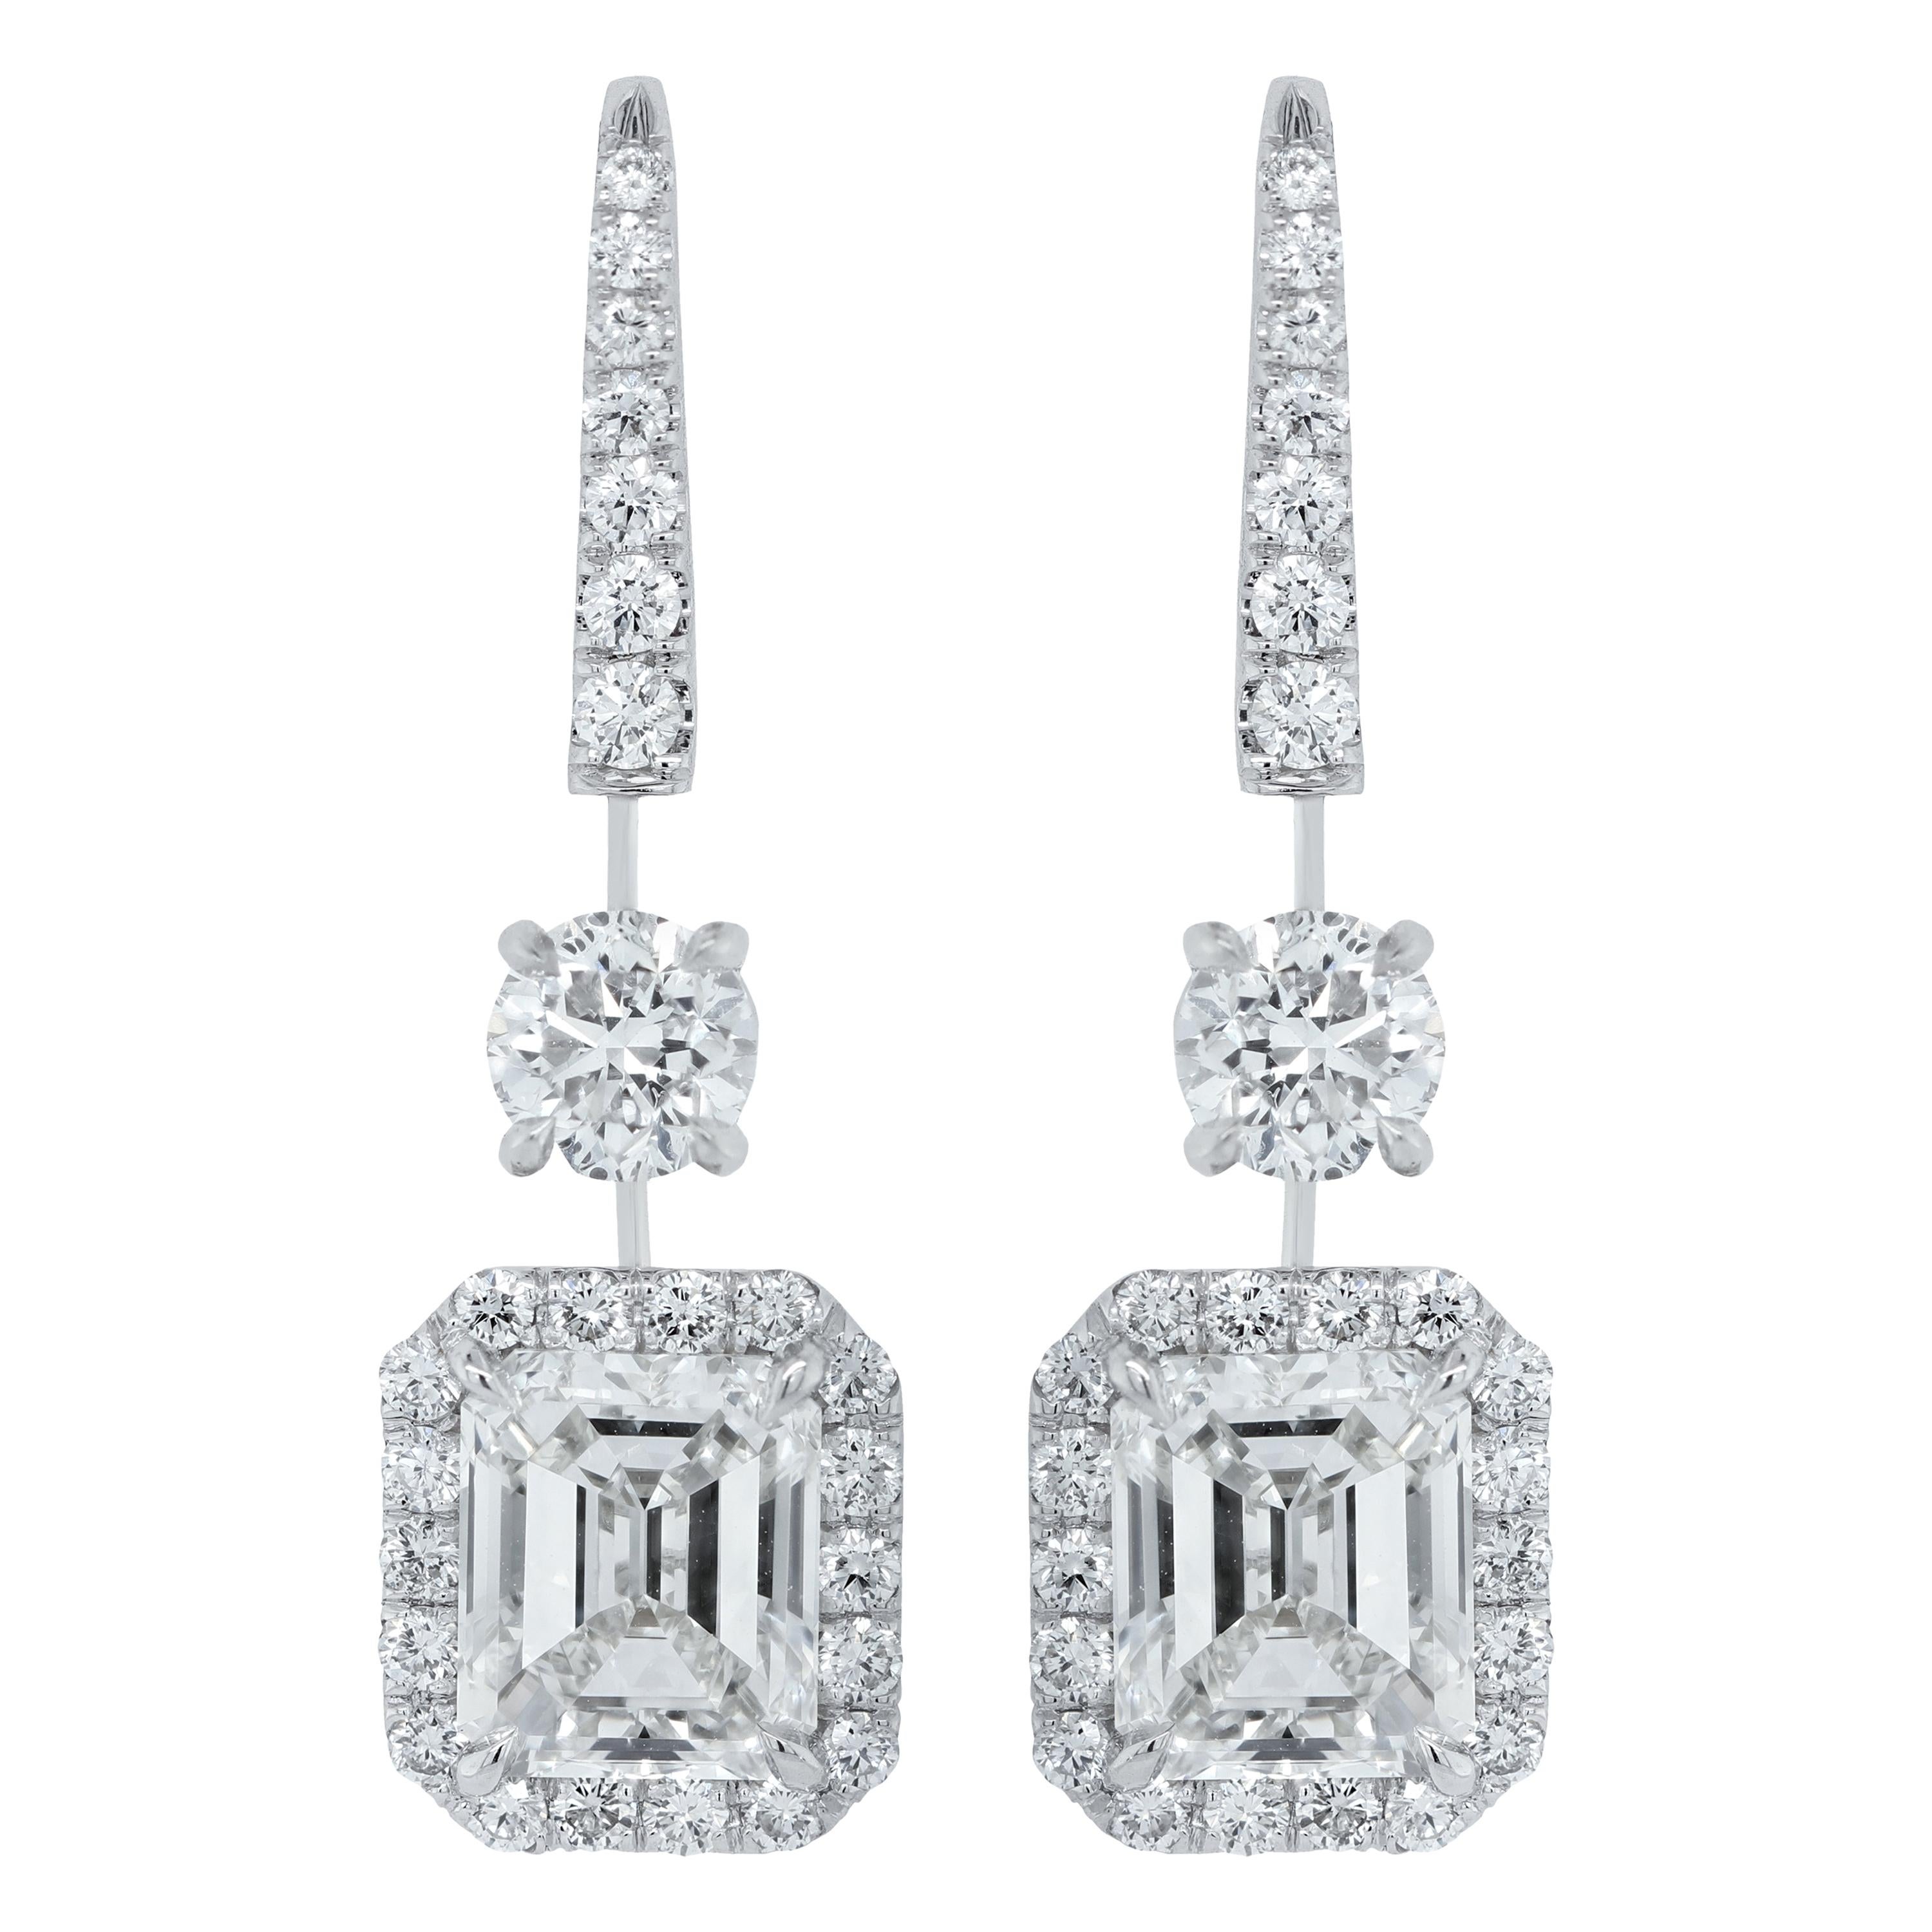 GIA Certified 4.01 Carat Emerald Cut Diamond Earrings